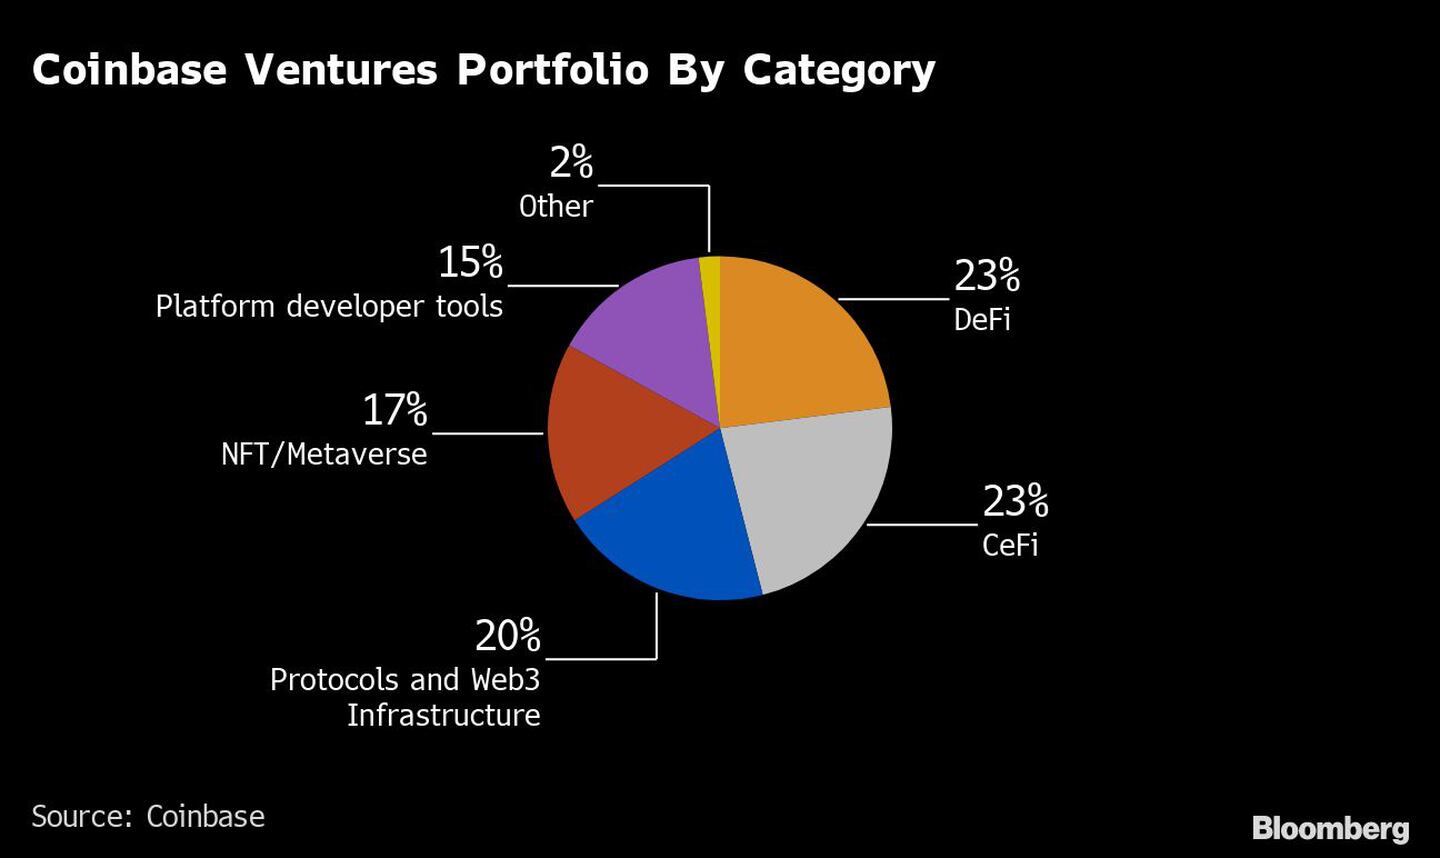 Cartera de Coinbase Ventures por categoría
Blanco: 23% CeFi
Naranja: 23% DeFi
Azul: 20% Protocolos e Infraestructura Web3
Rojo: 17% NFT/Metaverse
Púrpura: 15% Herramientas para desarrolladores de plataformas
Amarillo 2% Otrosdfd